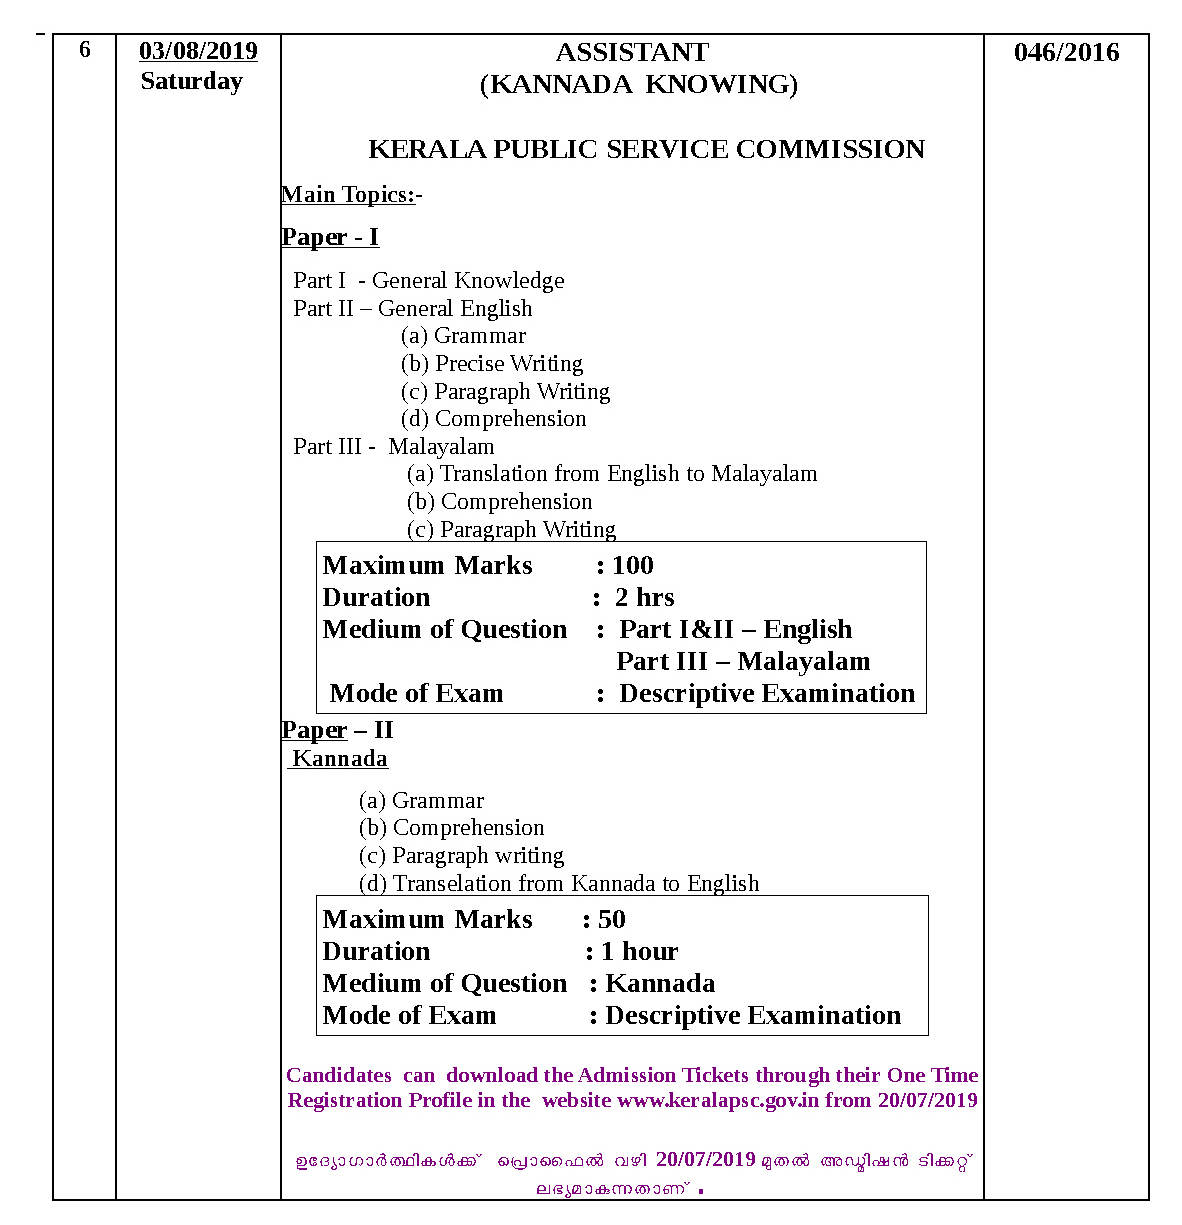 KPSC Examination Programme August 2019 - Notification Image 4